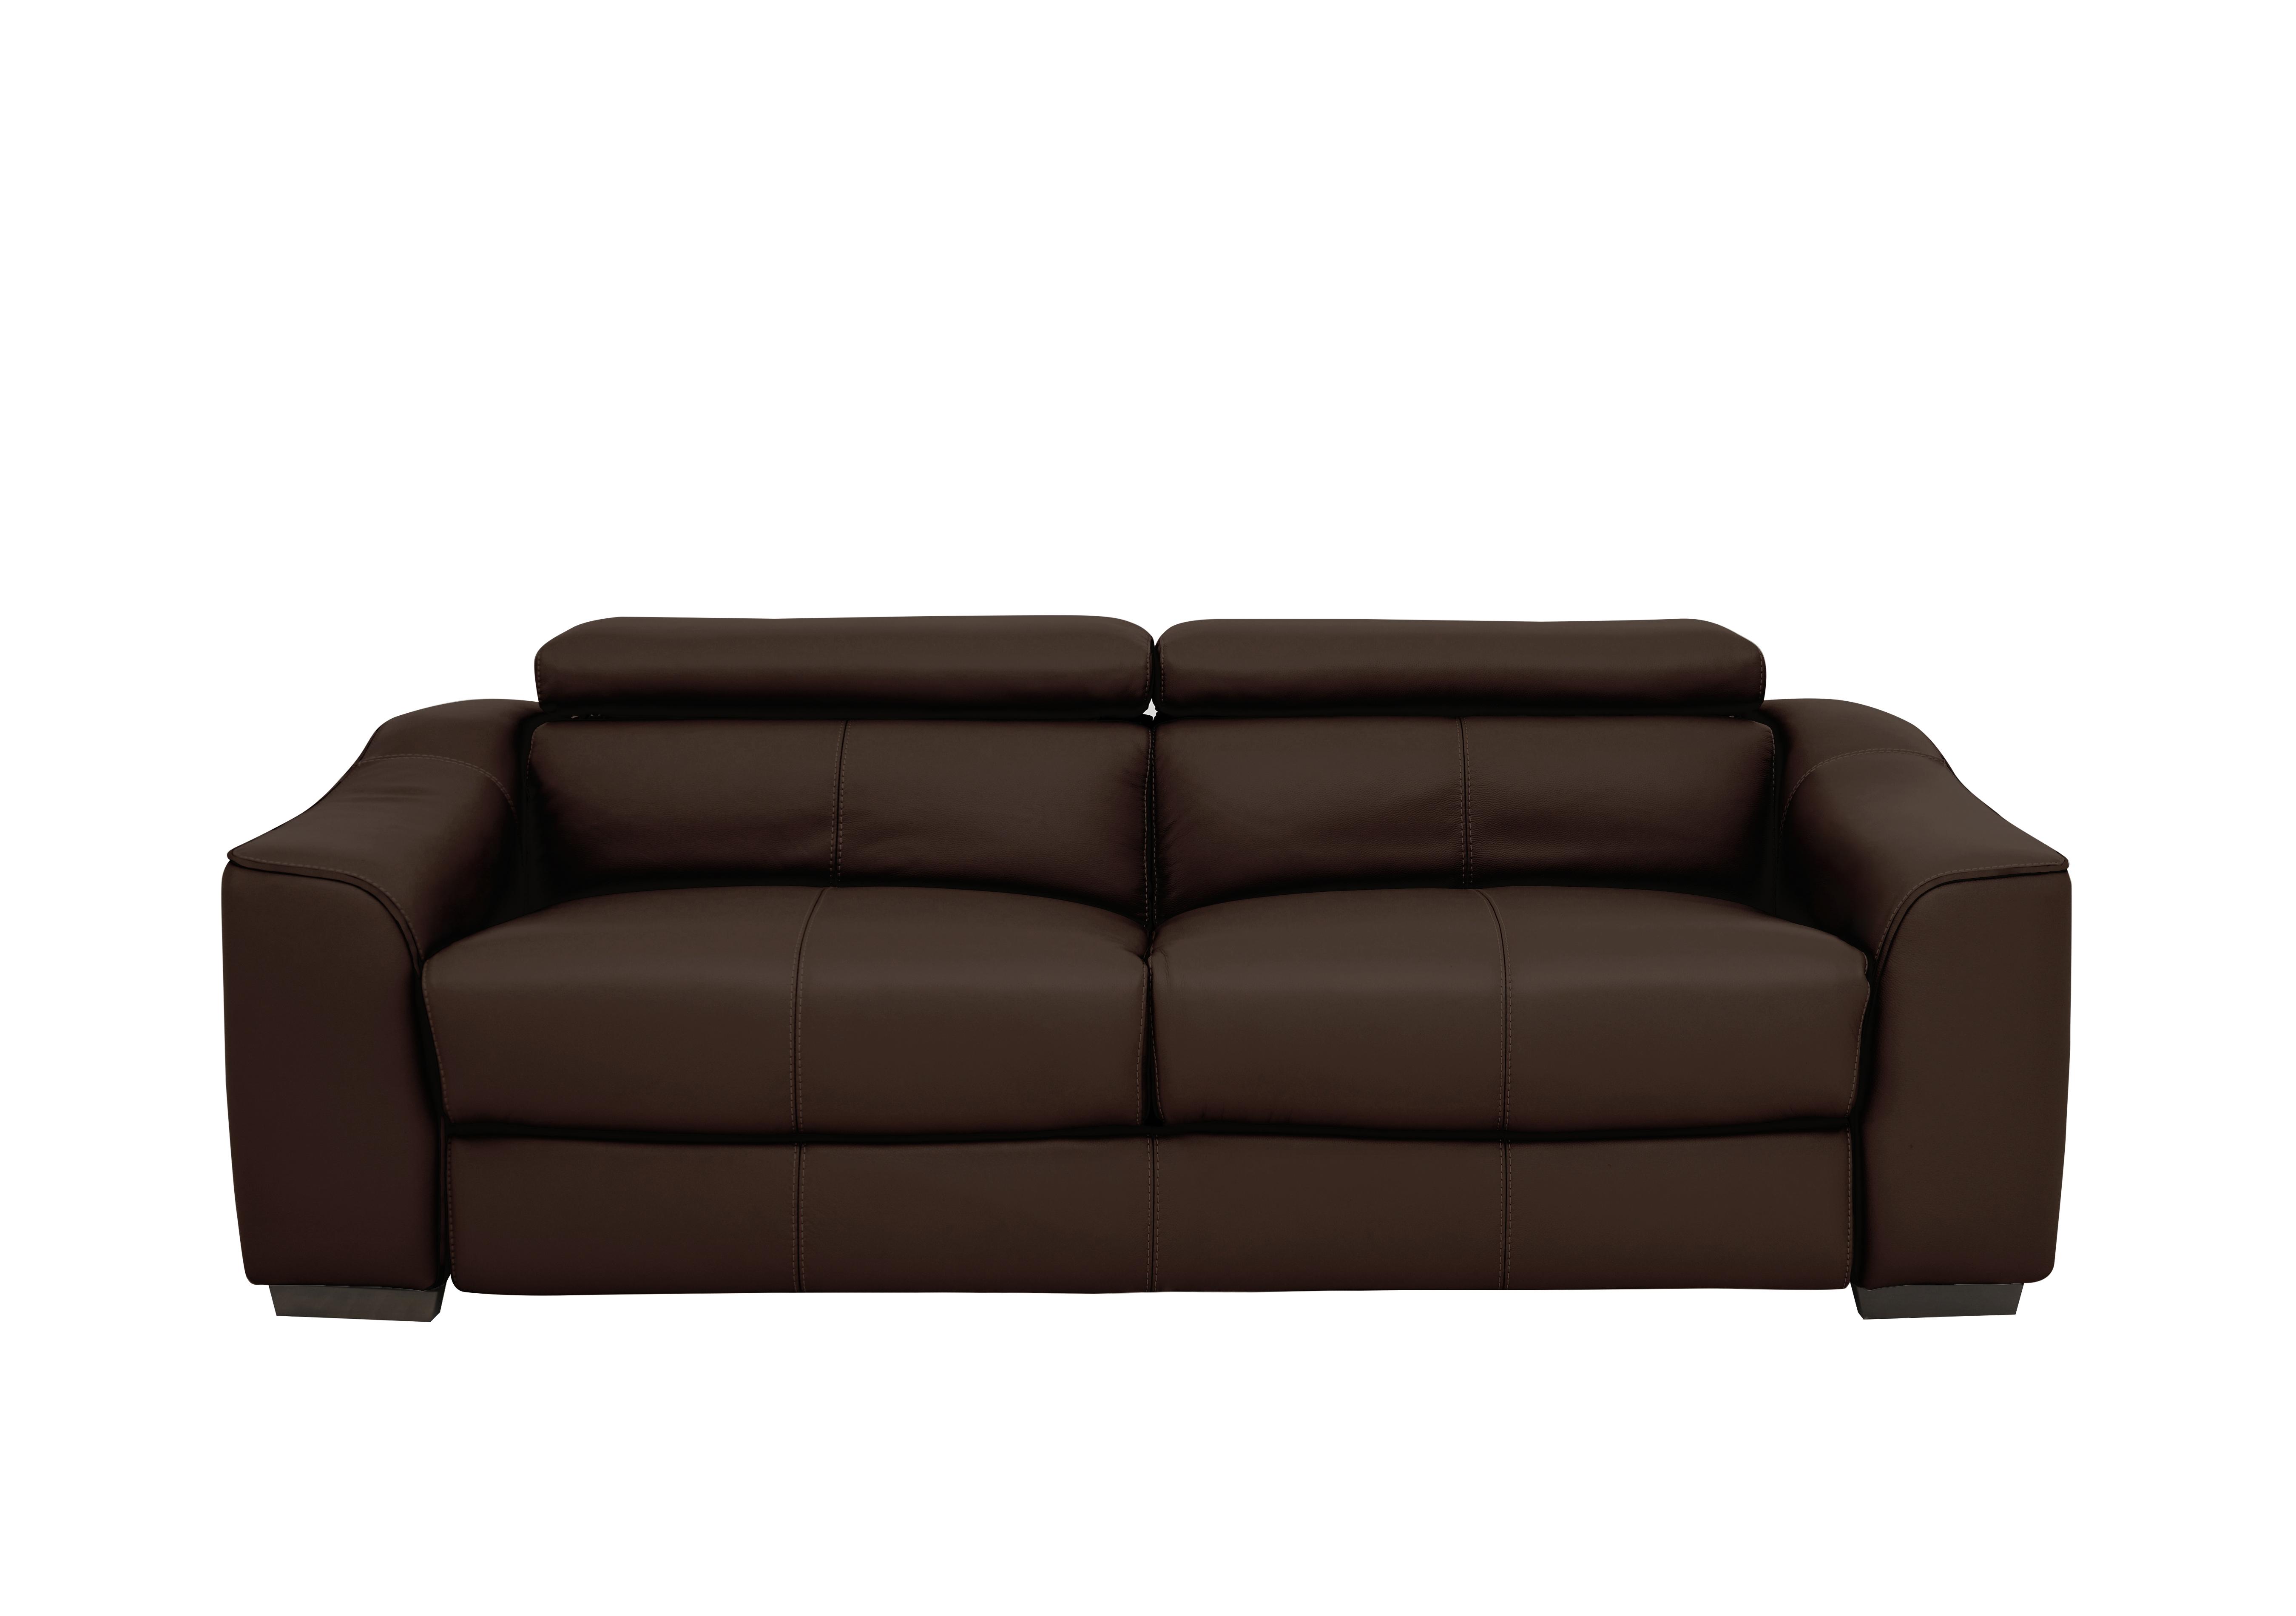 Elixir 3 Seater Leather Sofa Bed in Bv-1748 Dark Chocolate on Furniture Village